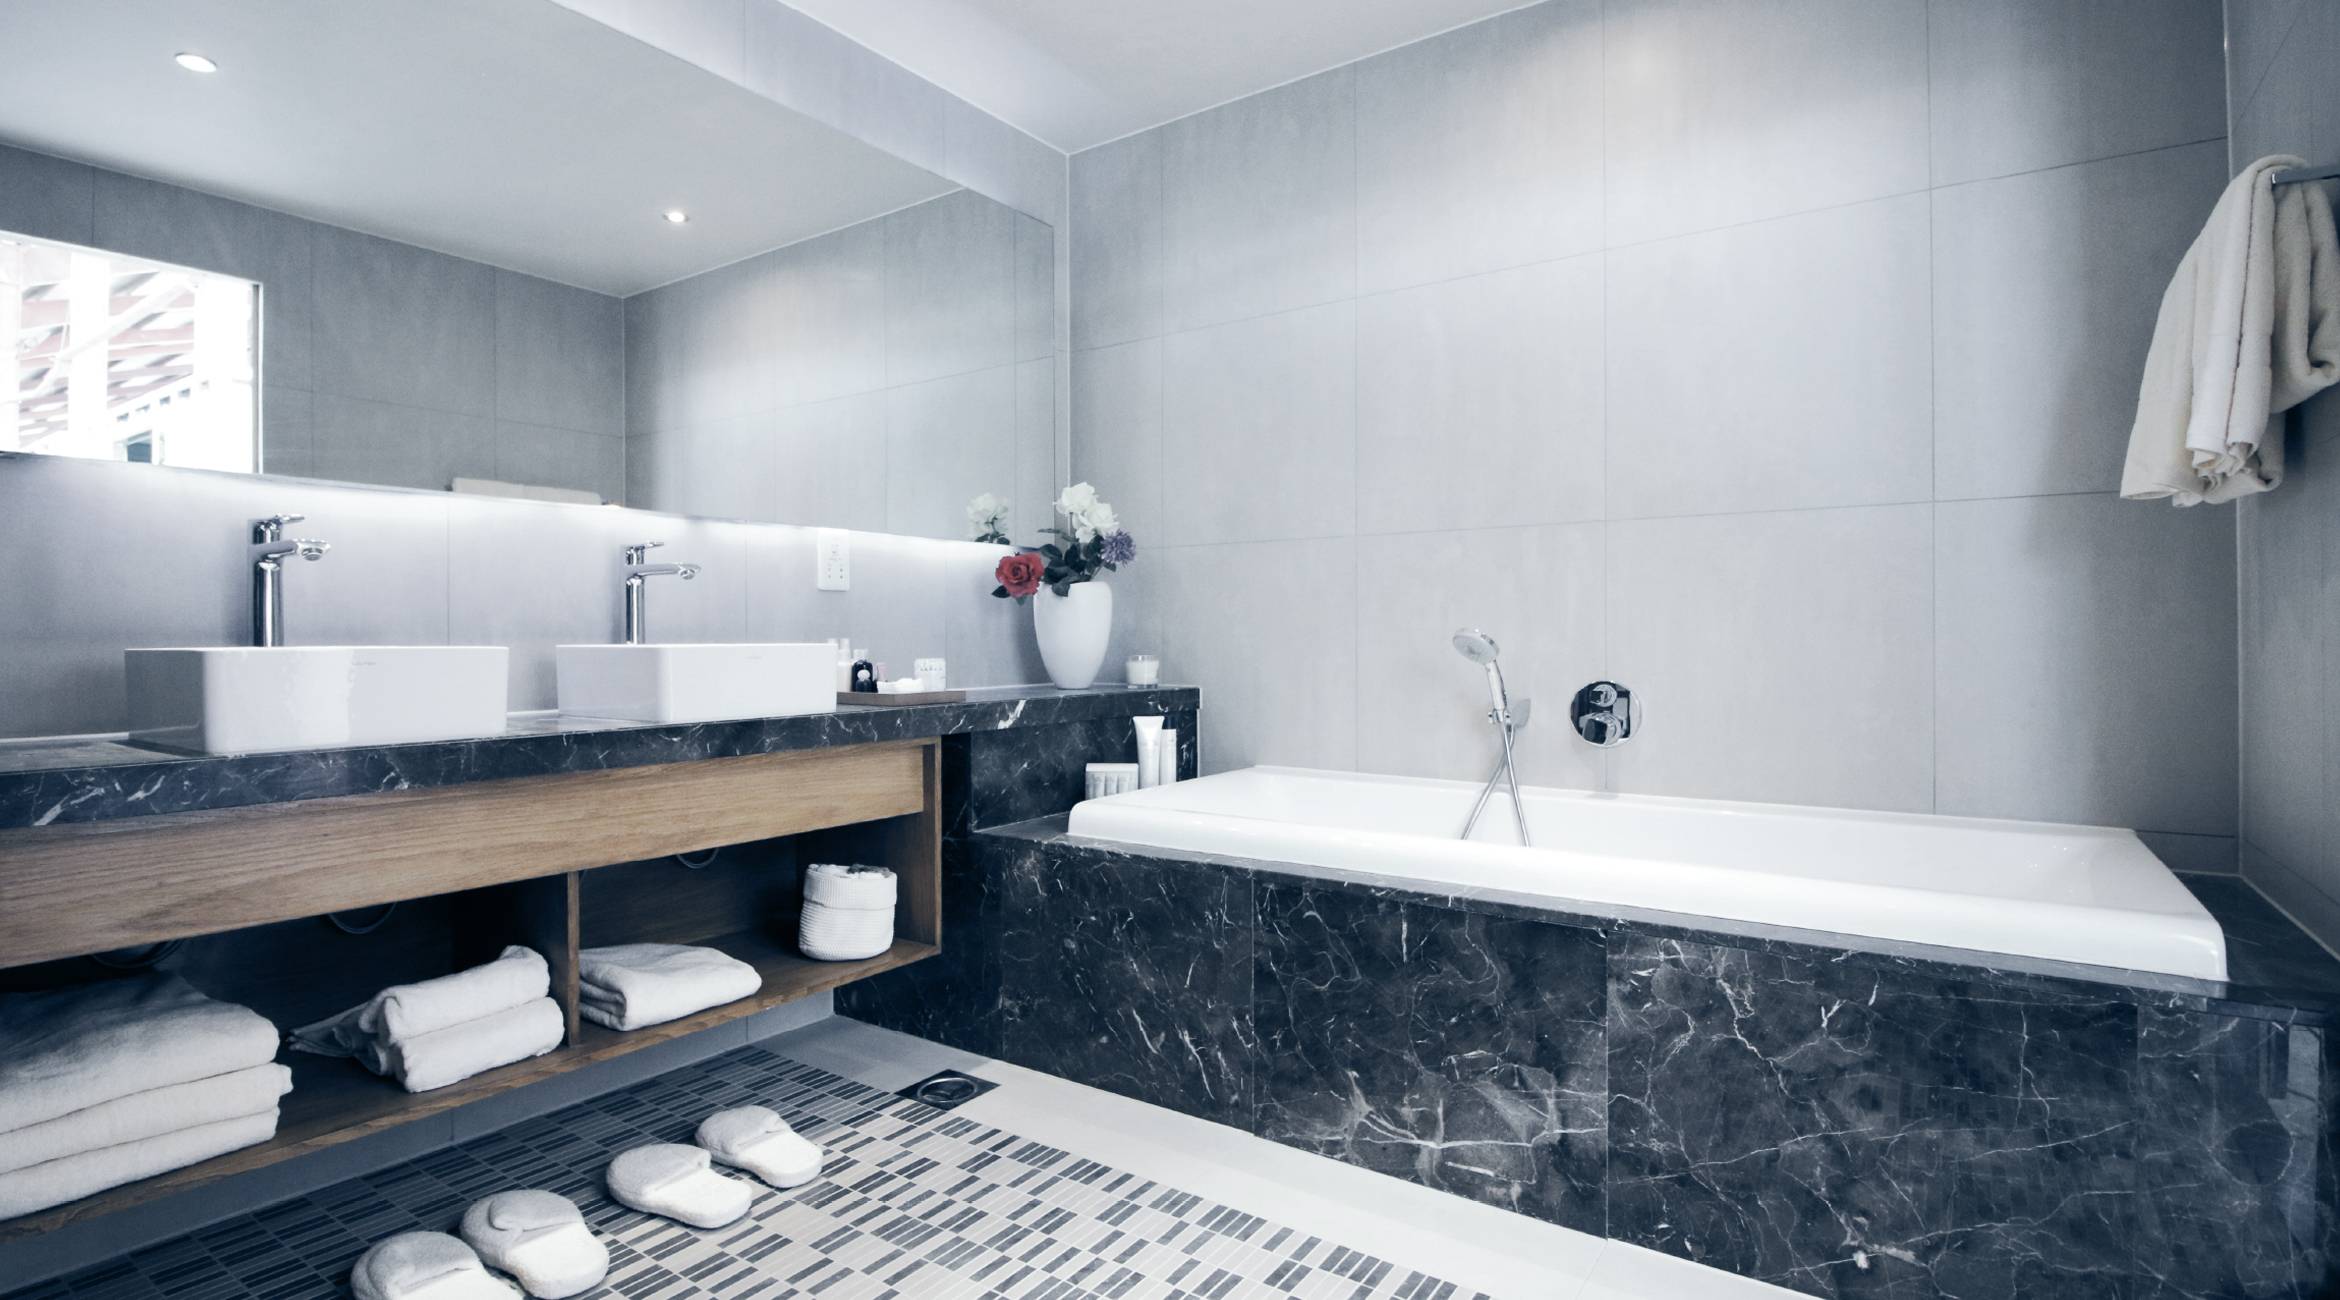 5 Star Hotel Bathrooms Pictures - Bathroom Design Ideas